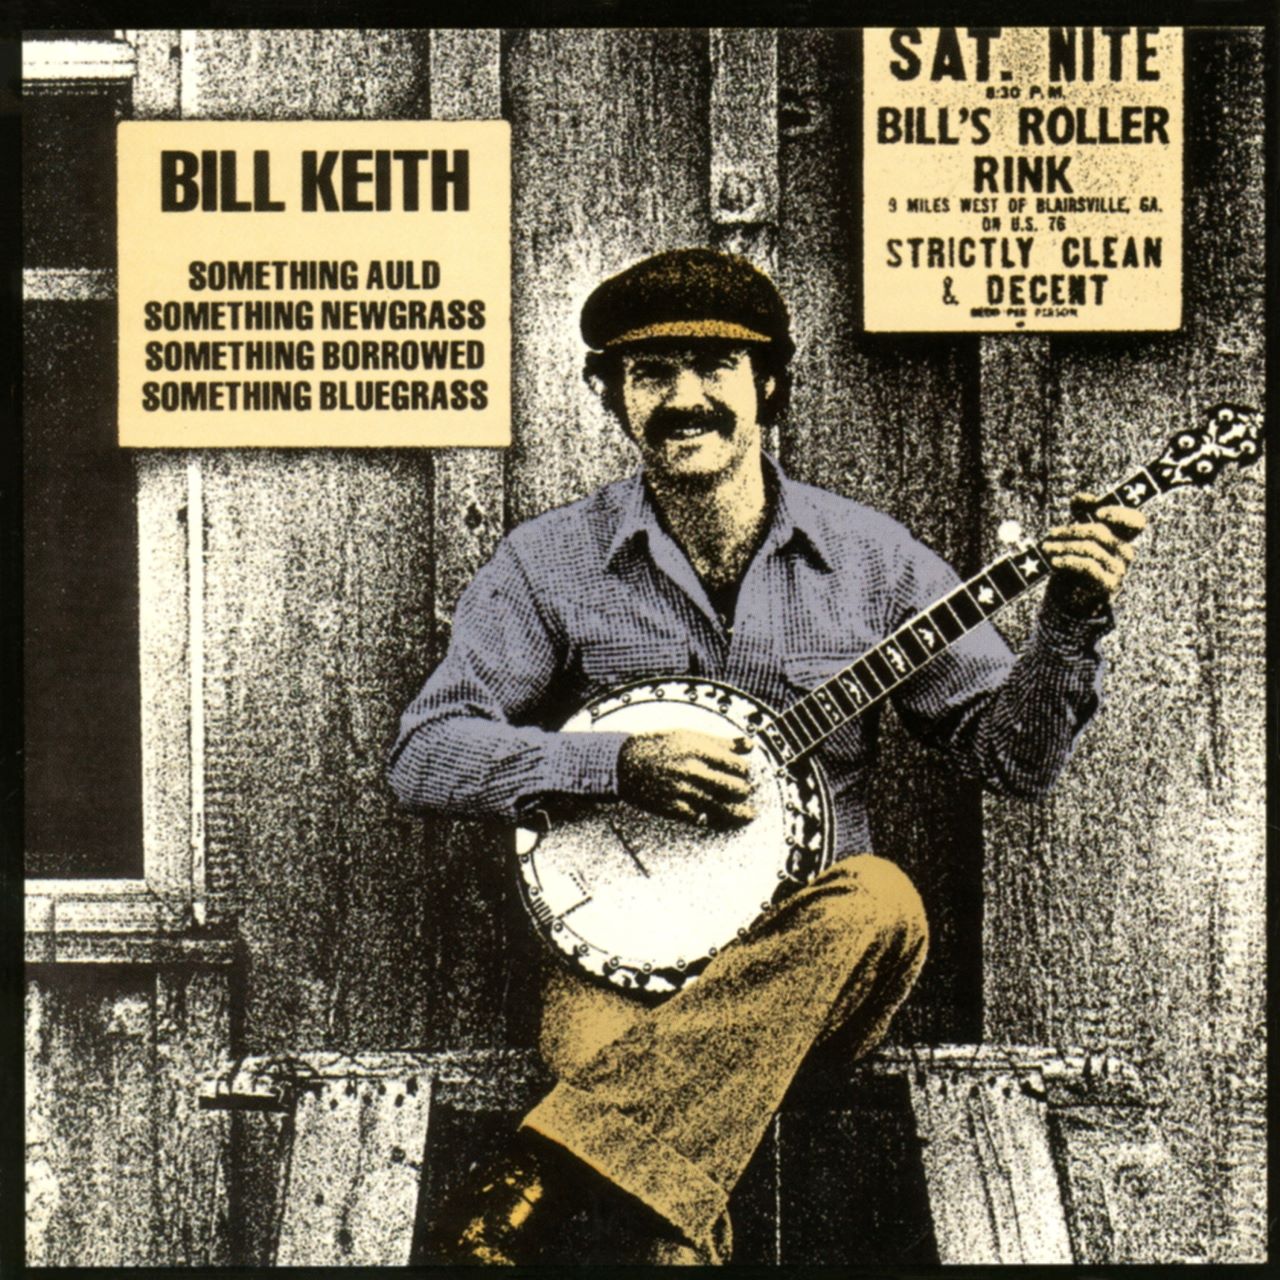 Bill Keith - Something Auld, Something Newgrass, Something Borrowed, Something Bluegrass cover album